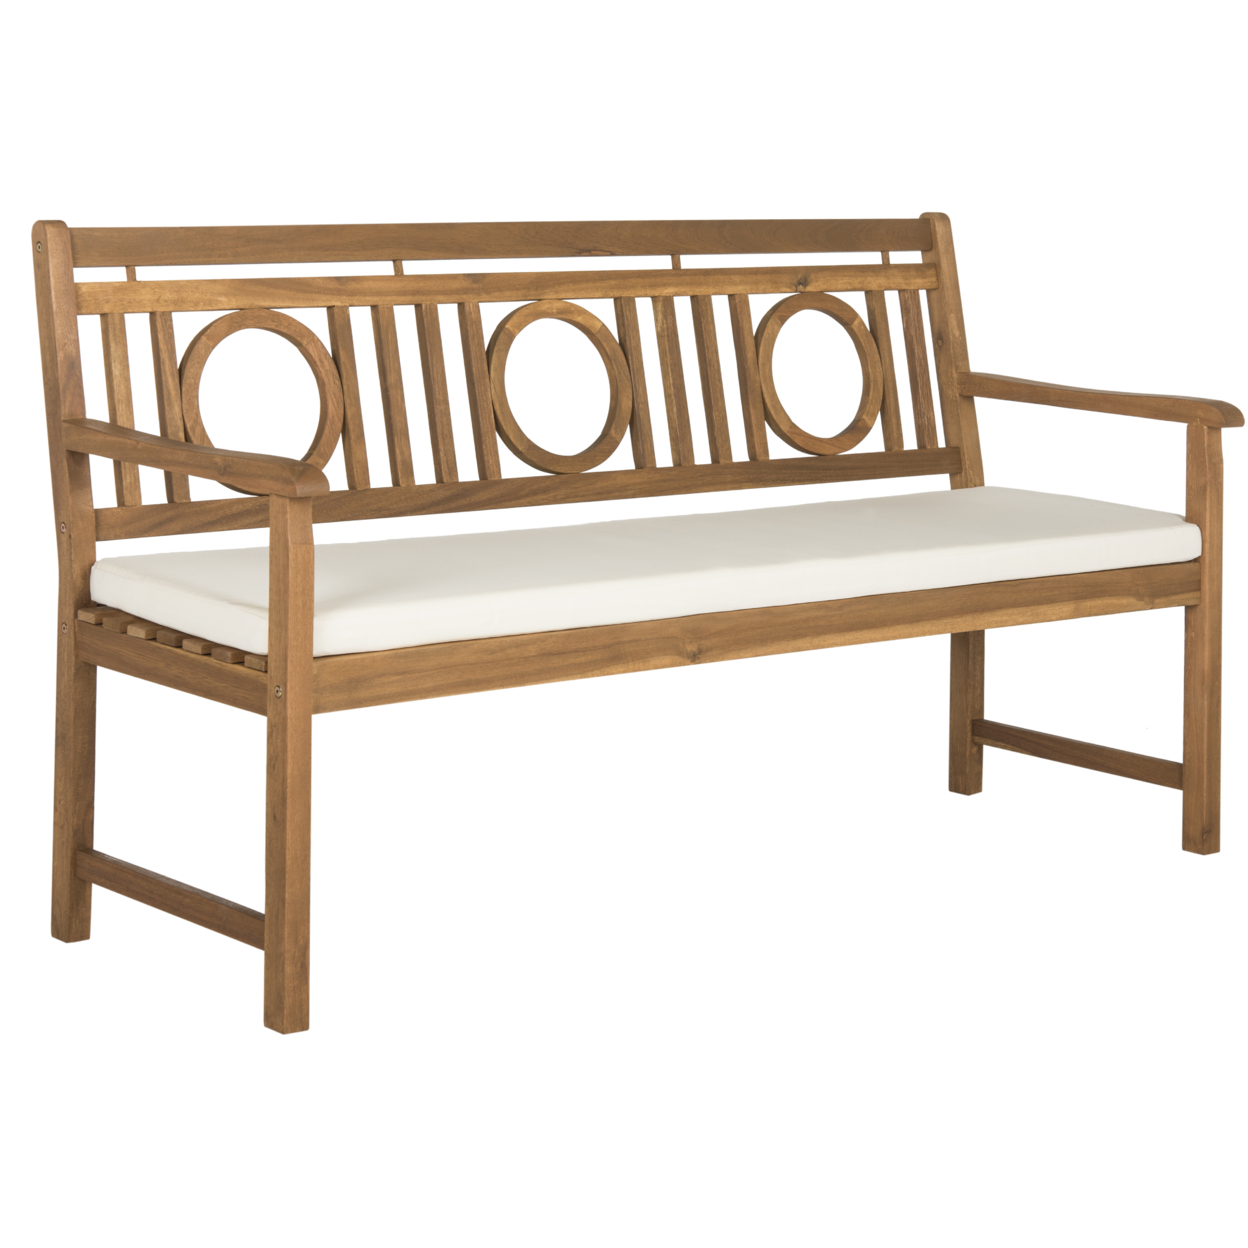 SAFAVIEH Outdoor Collection Montclair 3-Seat Bench Natural/Beige